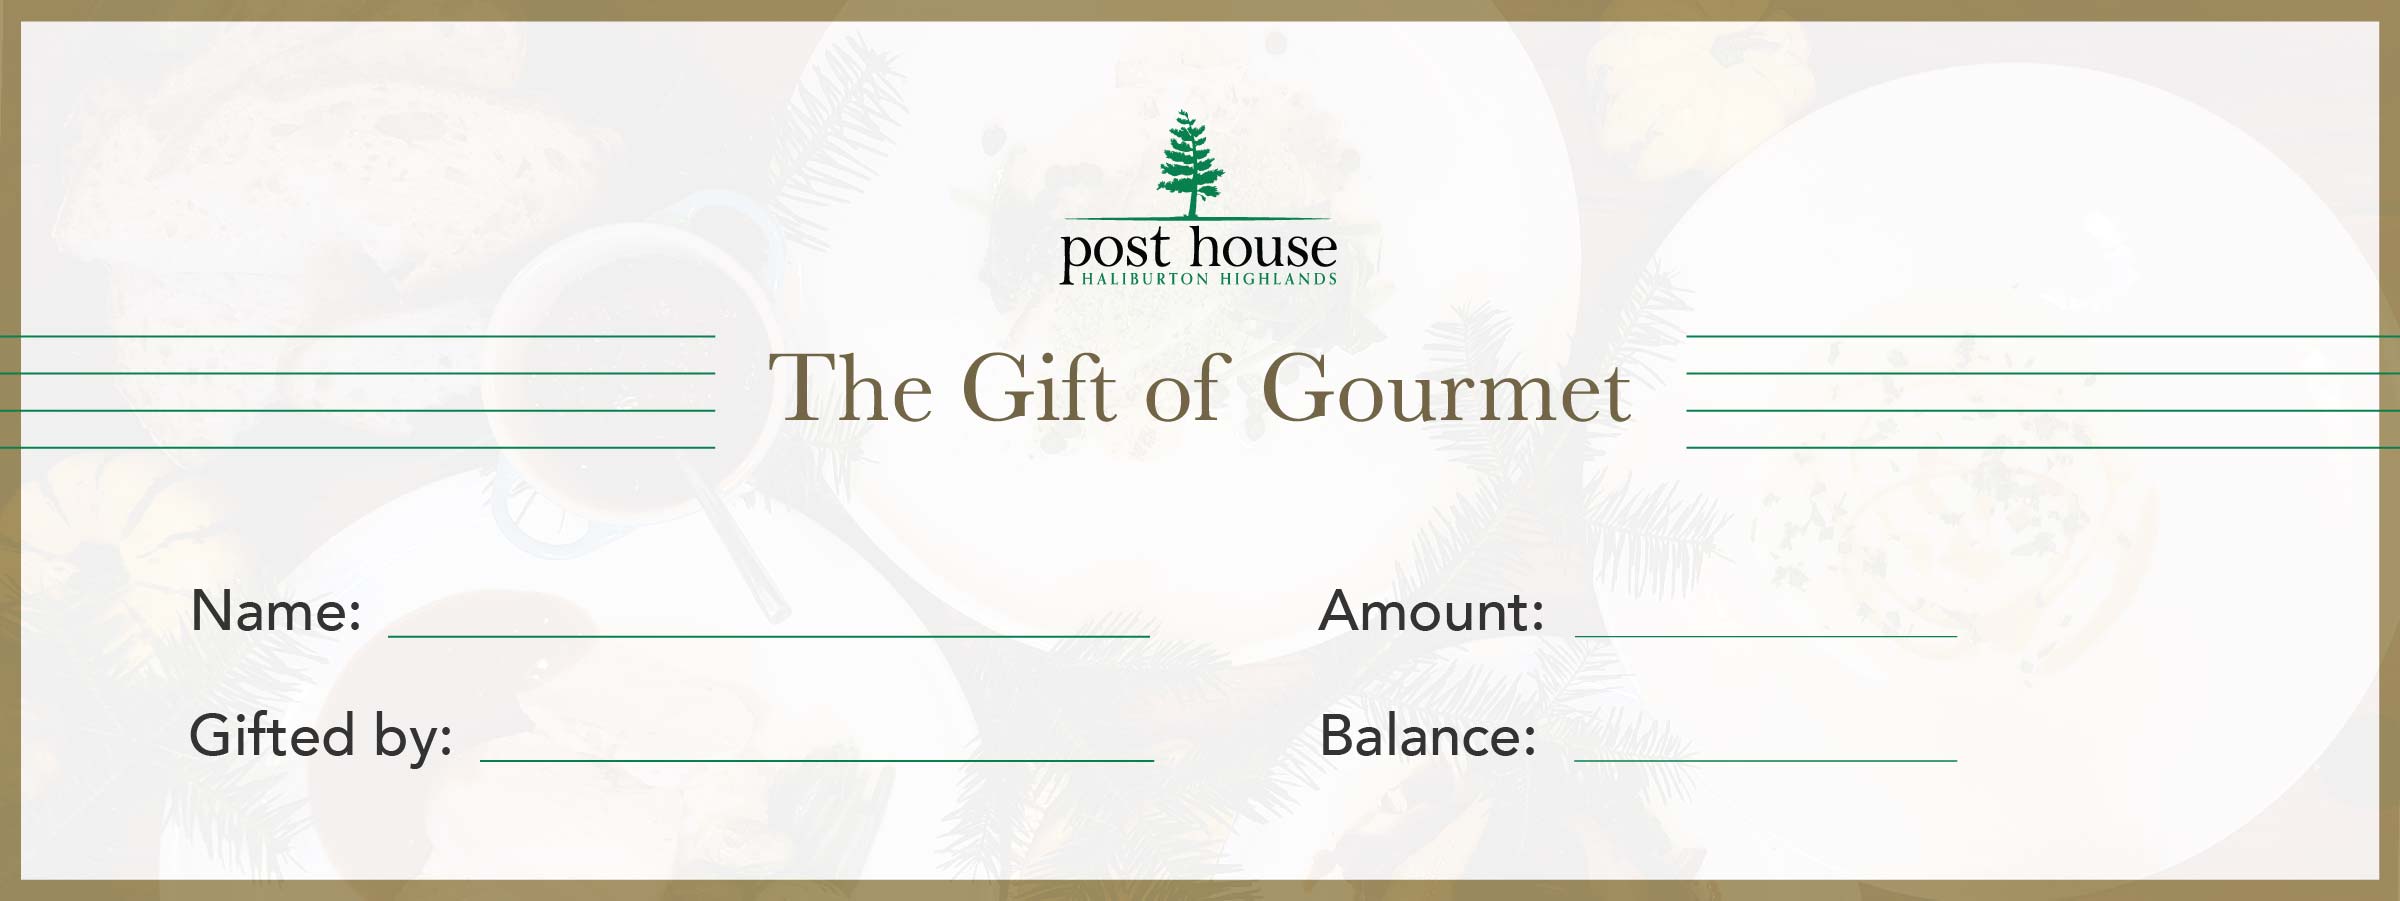 gift-of-gourmet-coupon